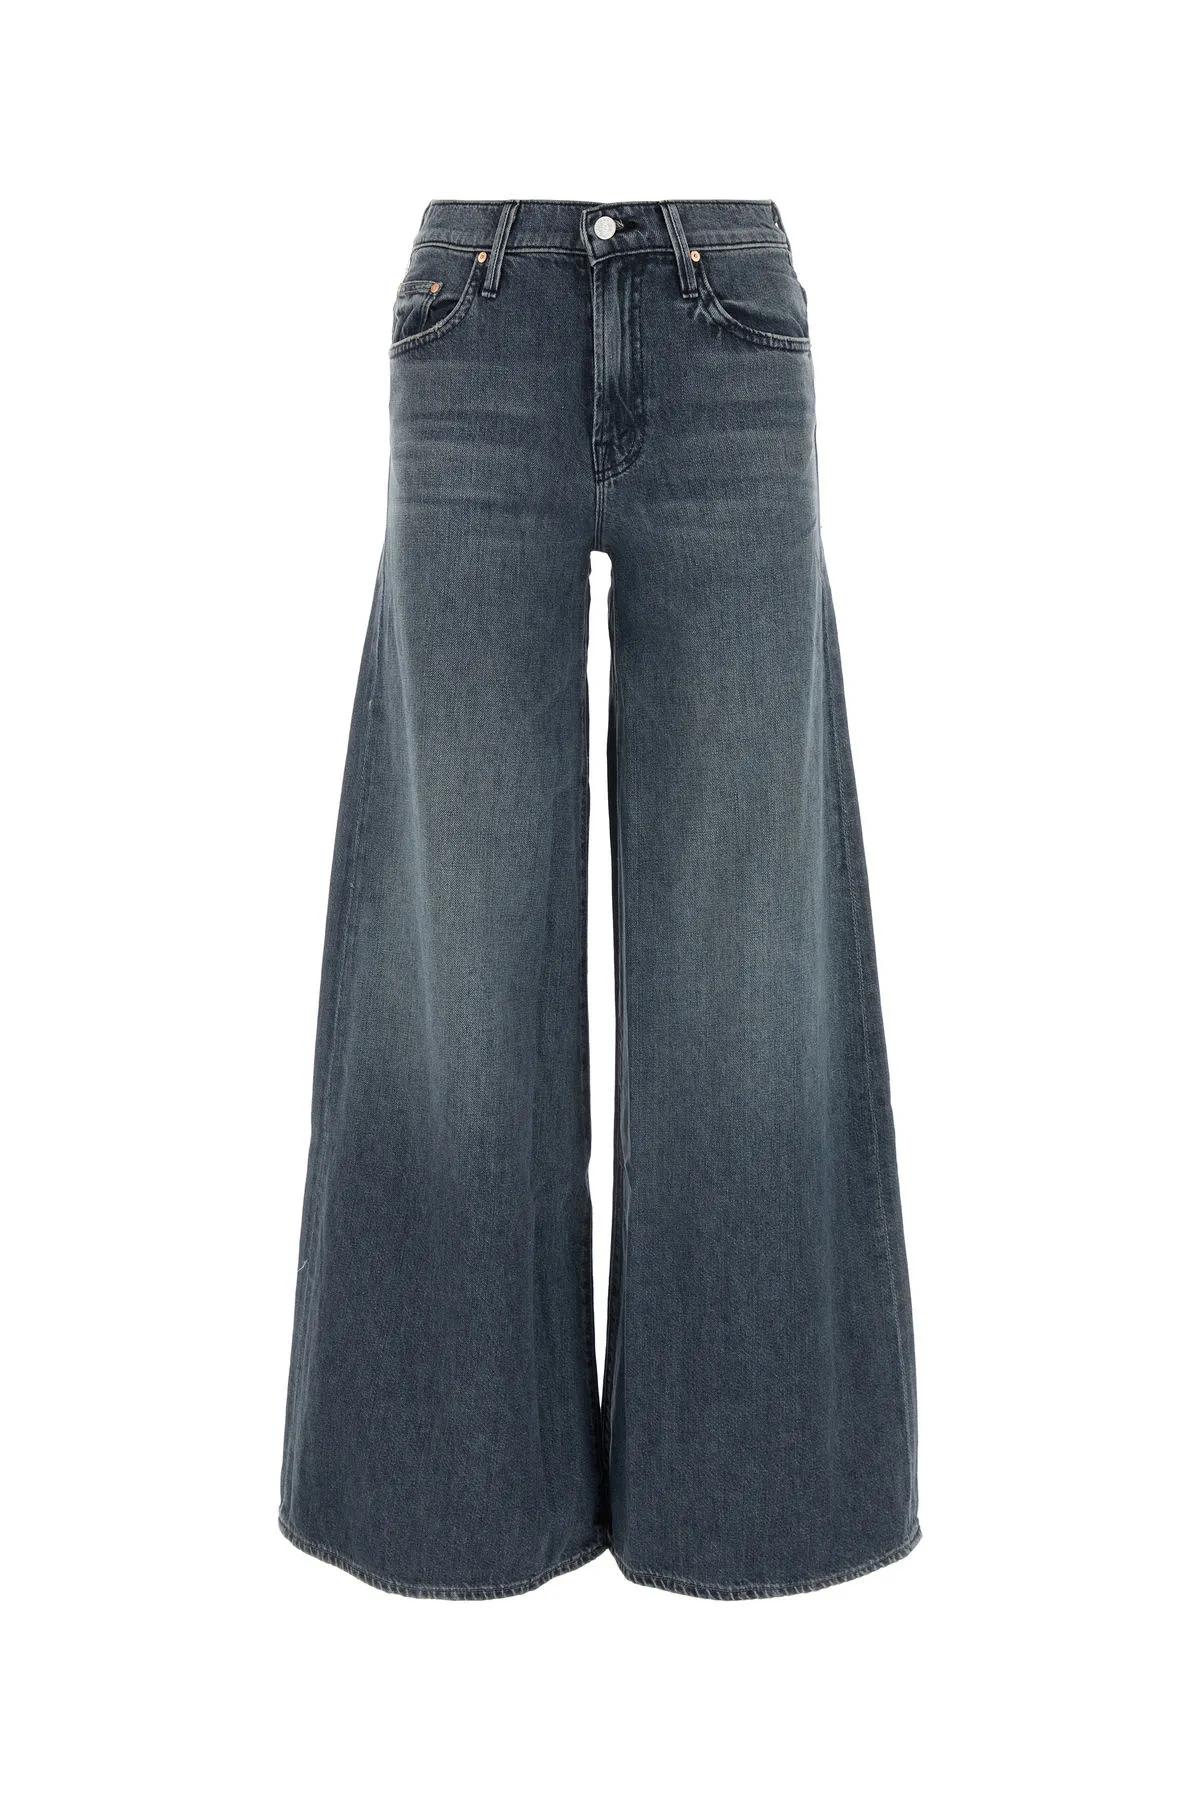 Dark Grey Denim The Swisher Sneak Wide-leg Jeans